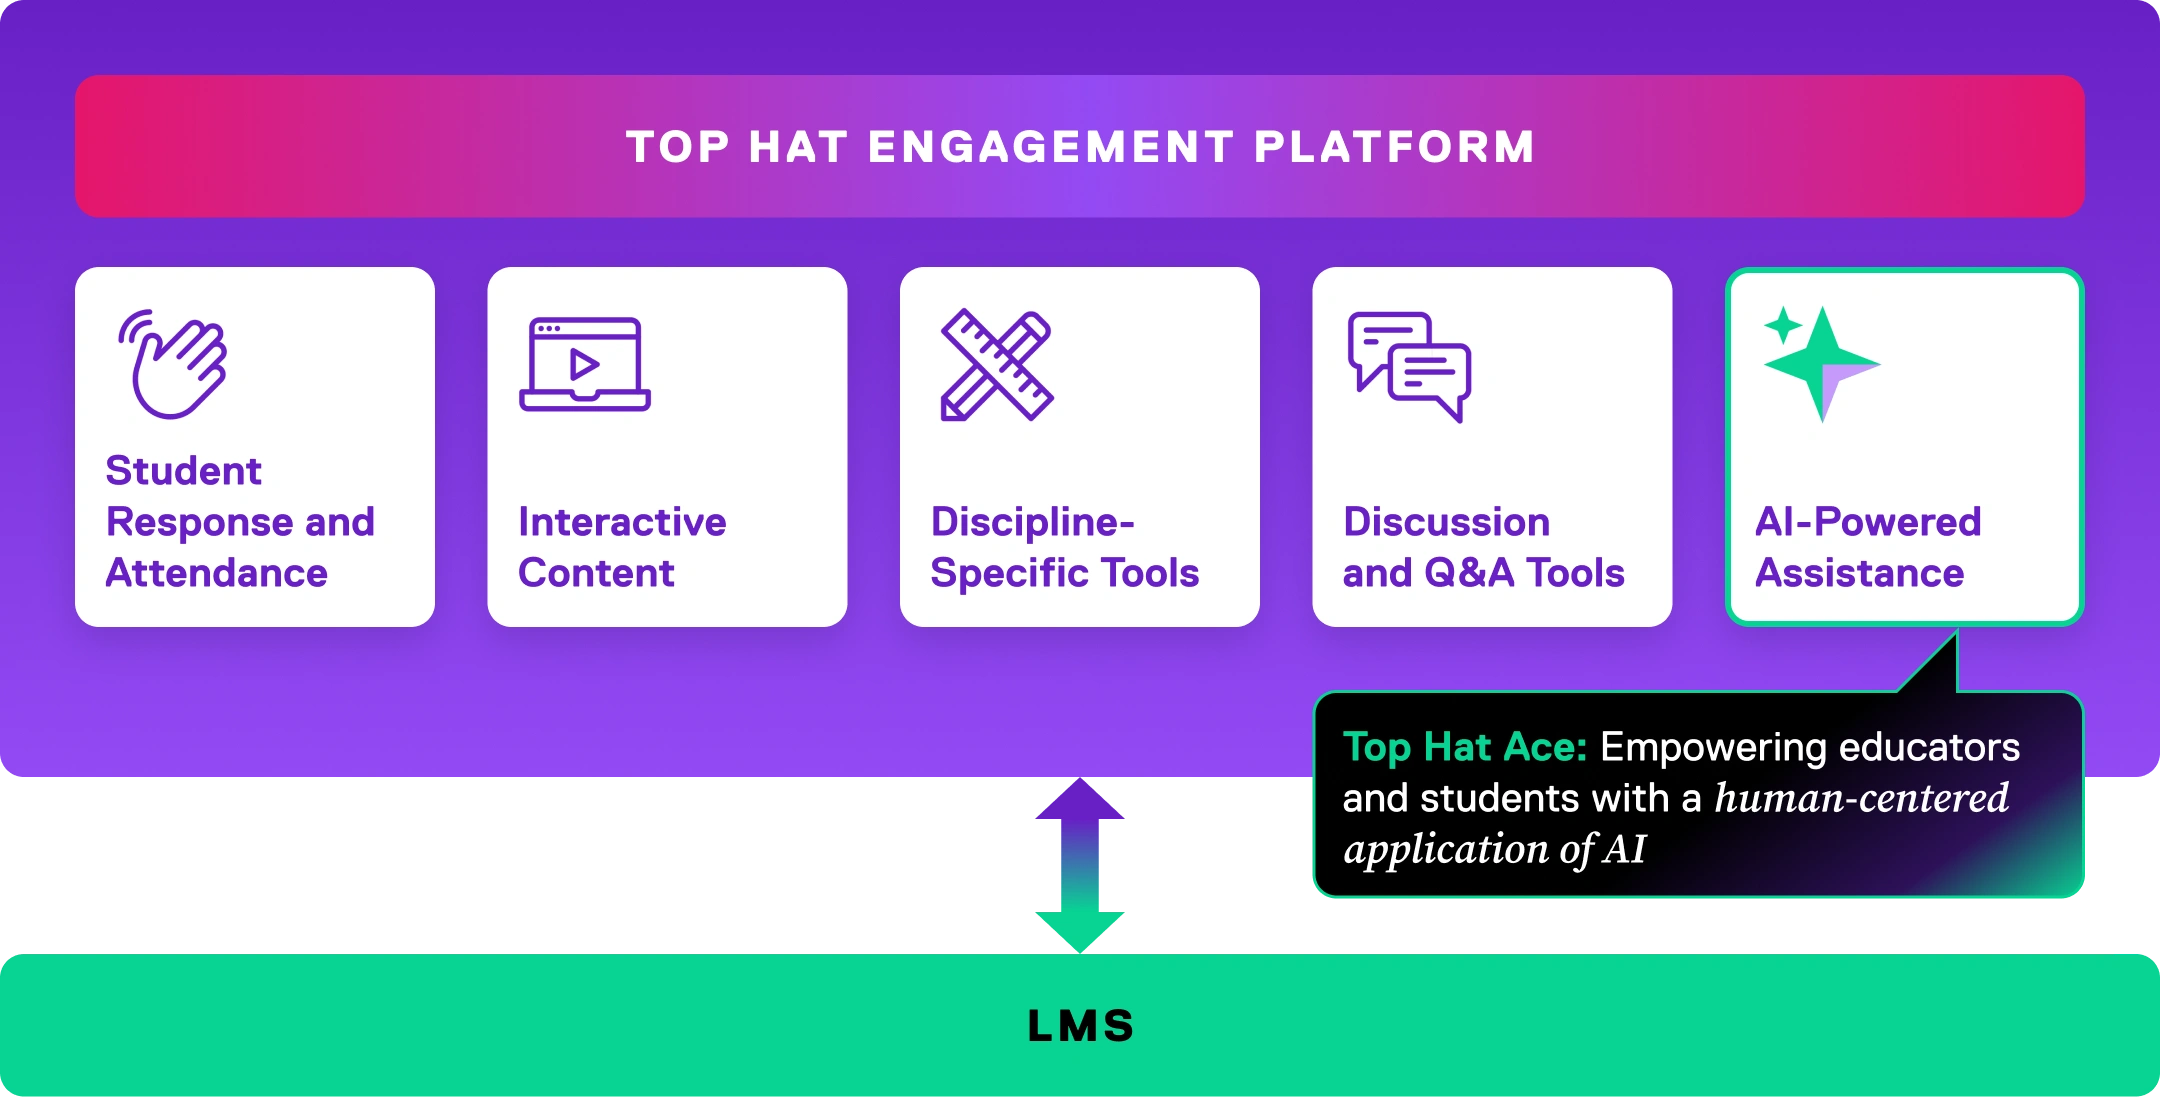 Product visual - 'Engagement Platform, Dynamic Content, Services'